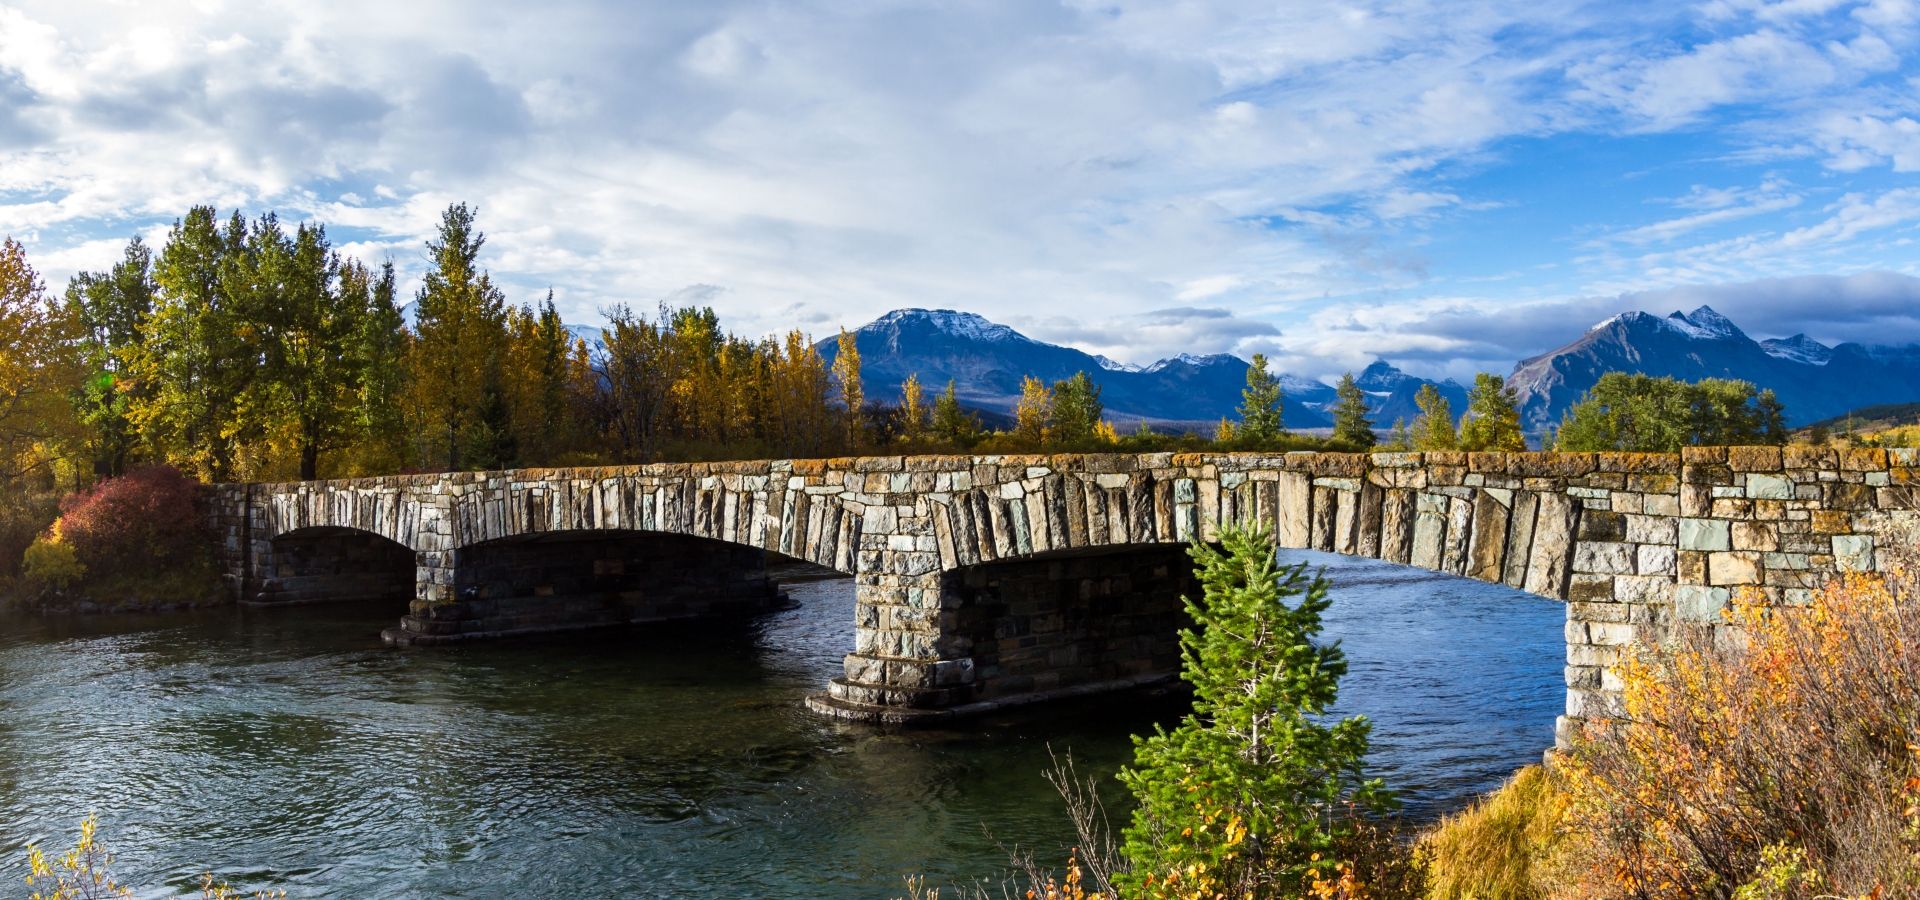 stone bridge at entrance of Glacier National Park in Montana